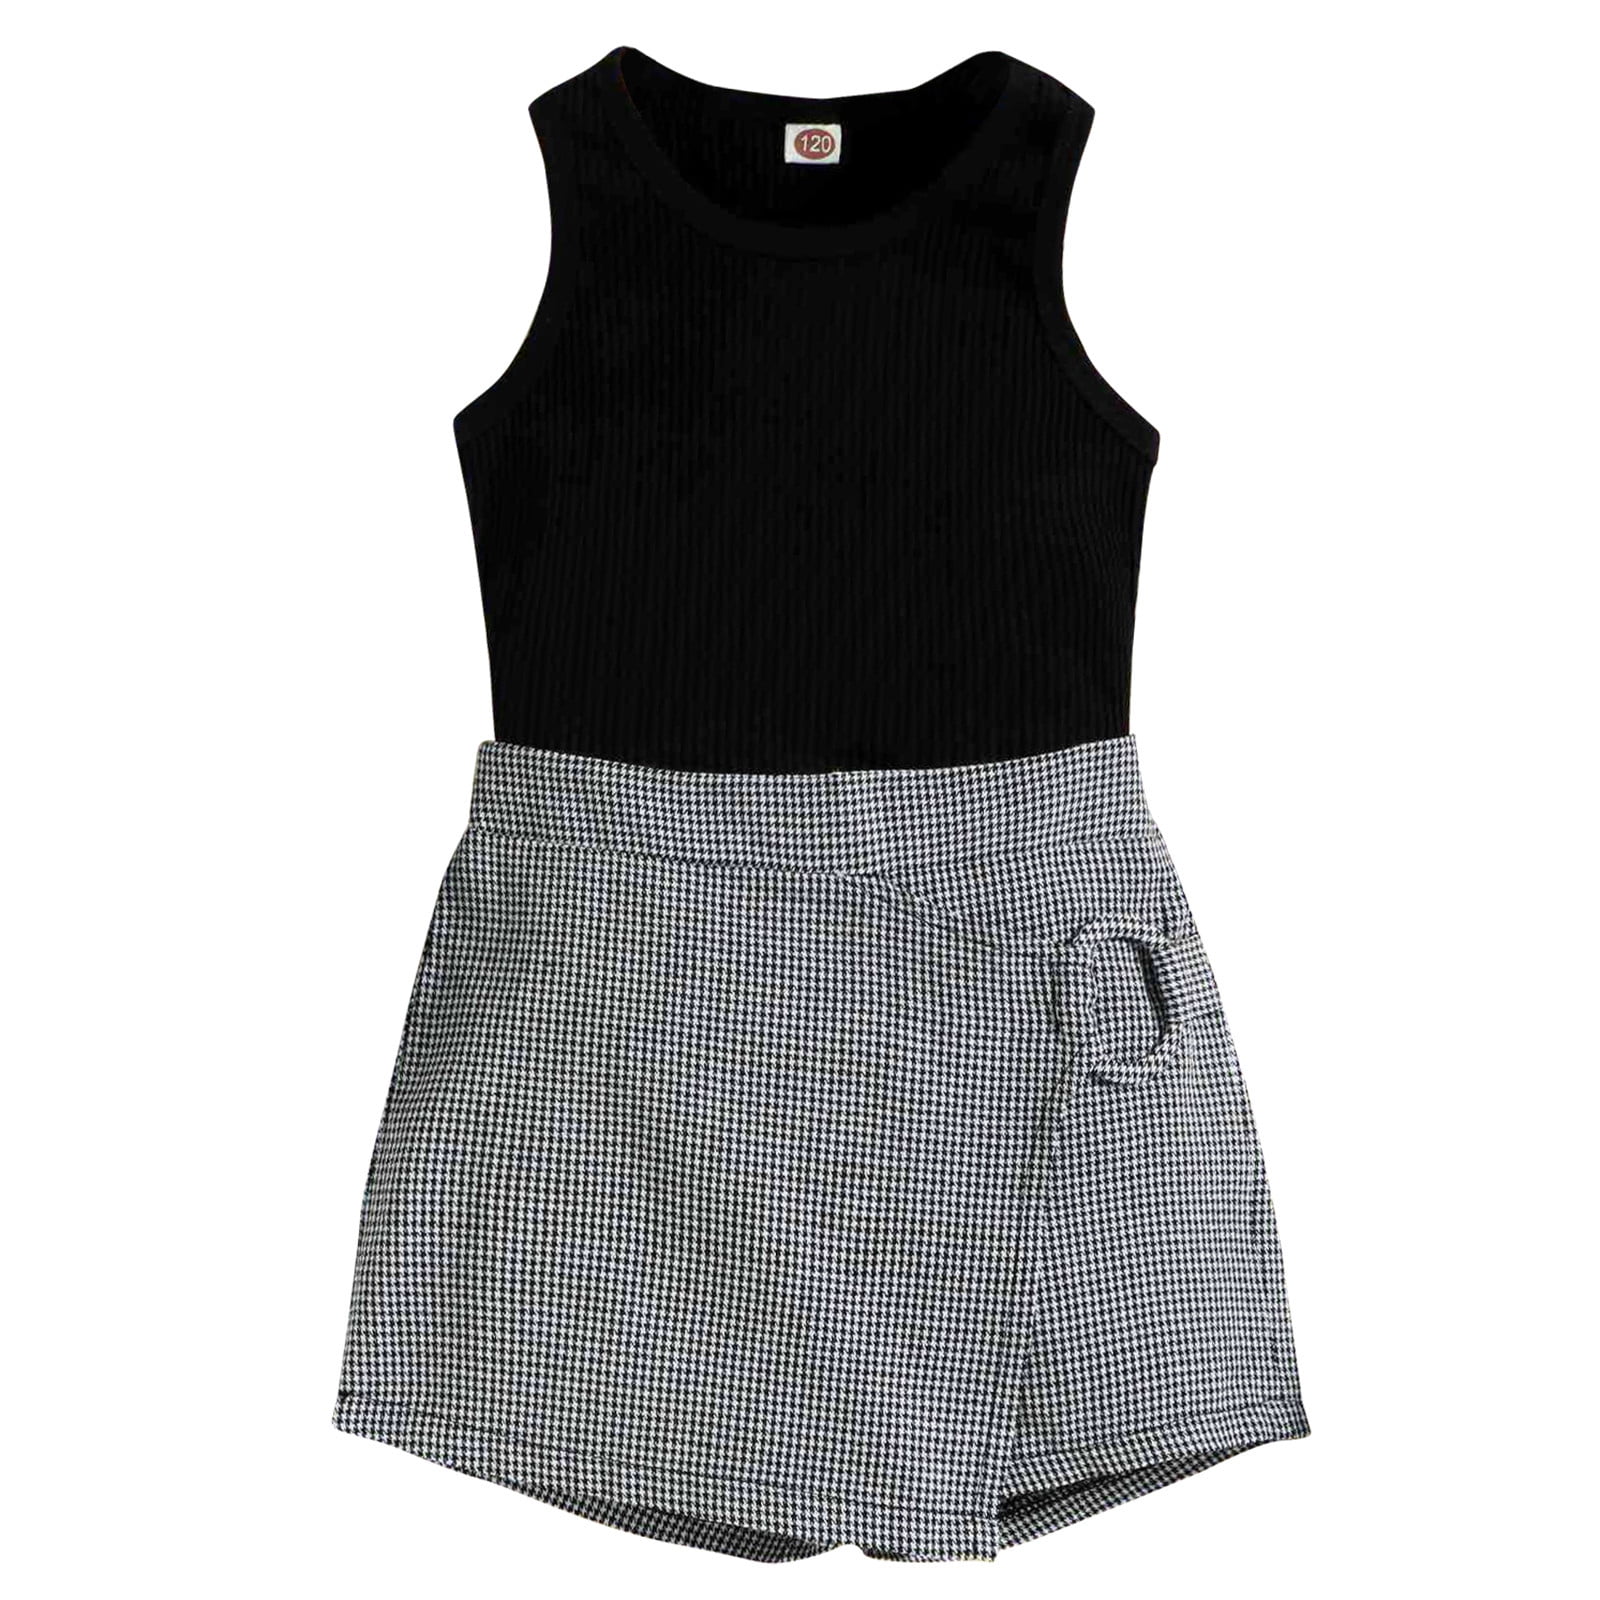 Zanjkr Kawaii Clothes, Kids Toddler Girls Sleeveless Vest Ribbed Tops Solid  Shorts Pants 2PCS Set, Girls' School Uniforms (Black, 4-5 Years)